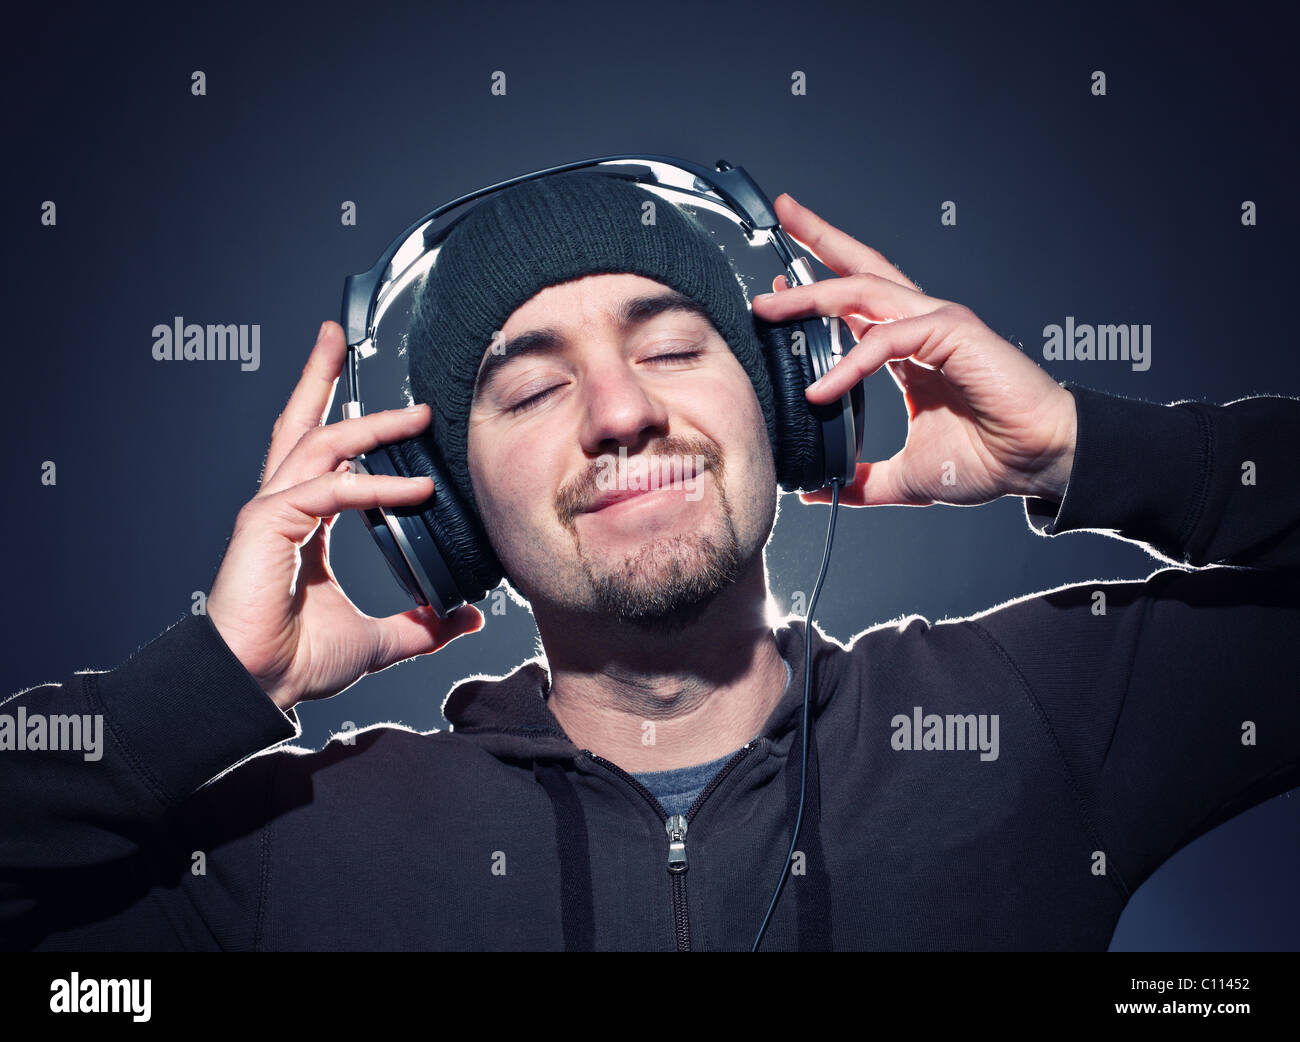 caucasian man wera cap and headphone feel the music Stock Photo